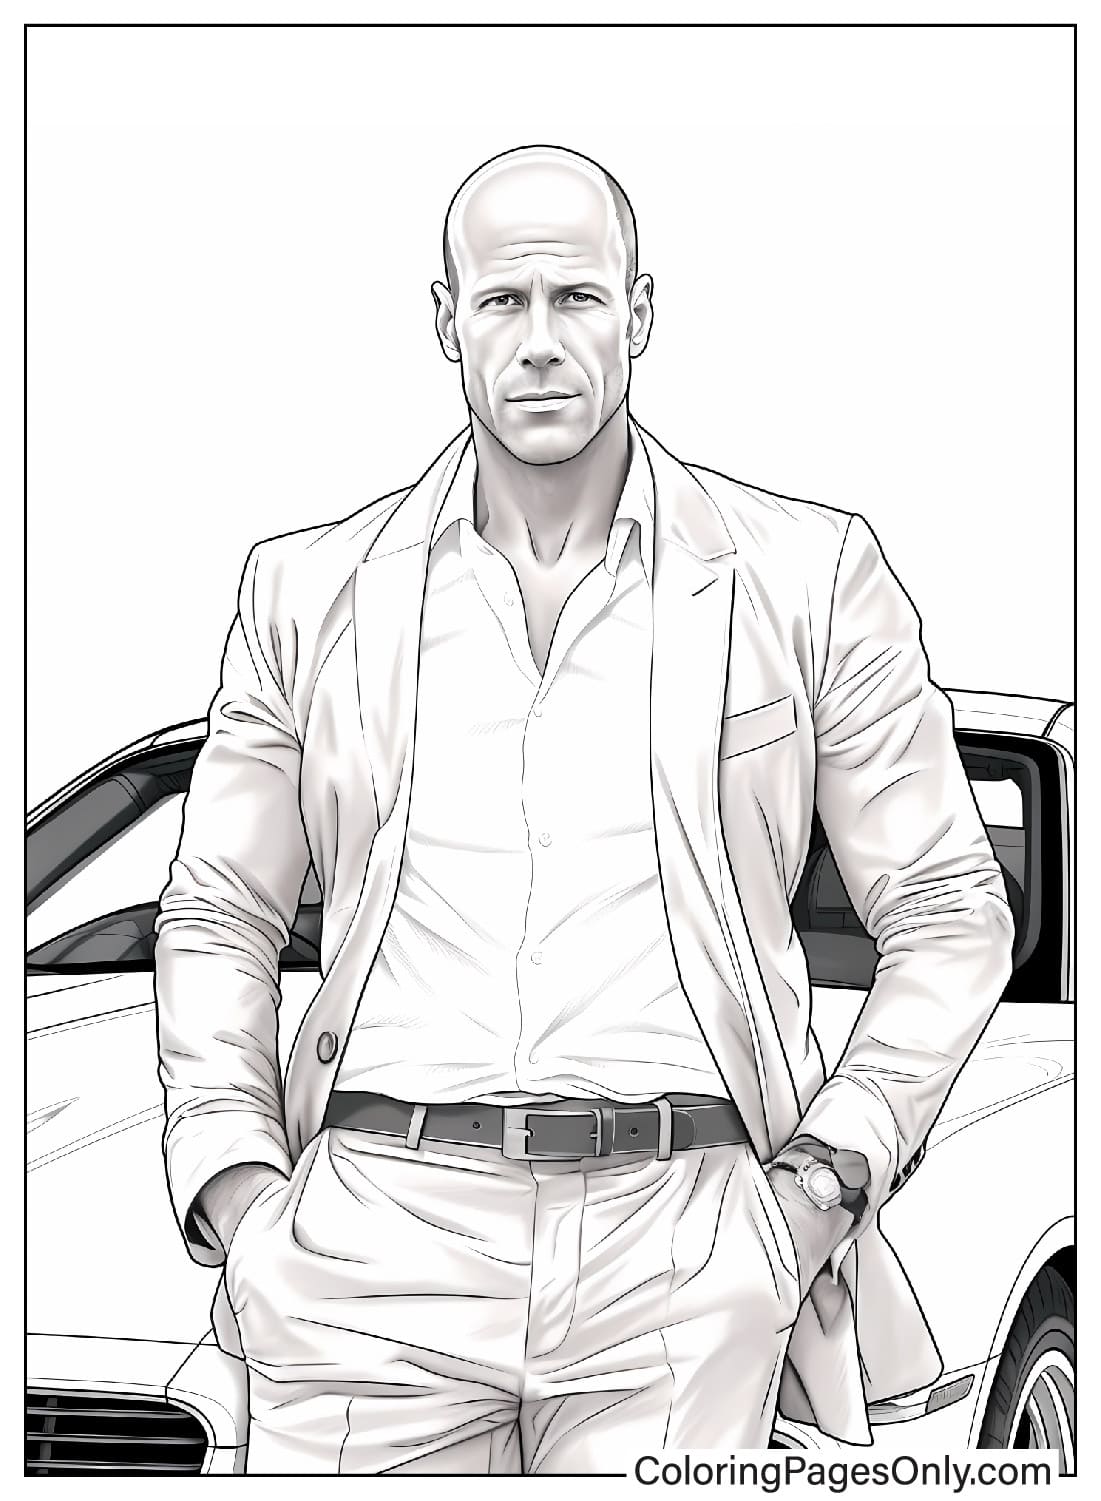 Página en color de Bruce Willis de Bruce Willis